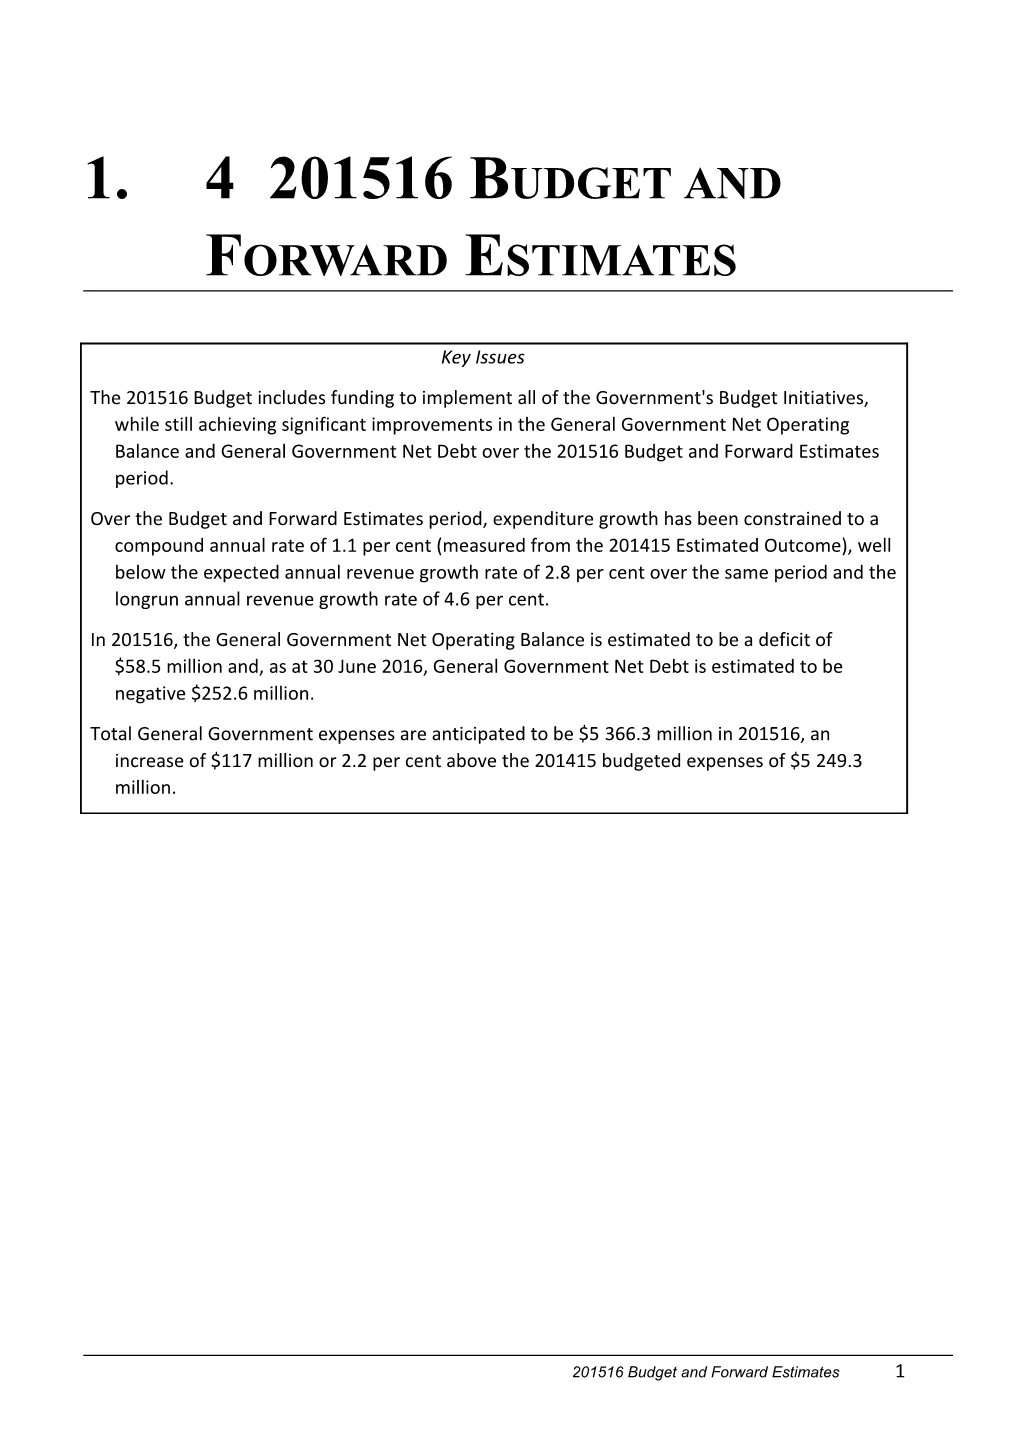 4 2015-16 Budget and Forward Estimates